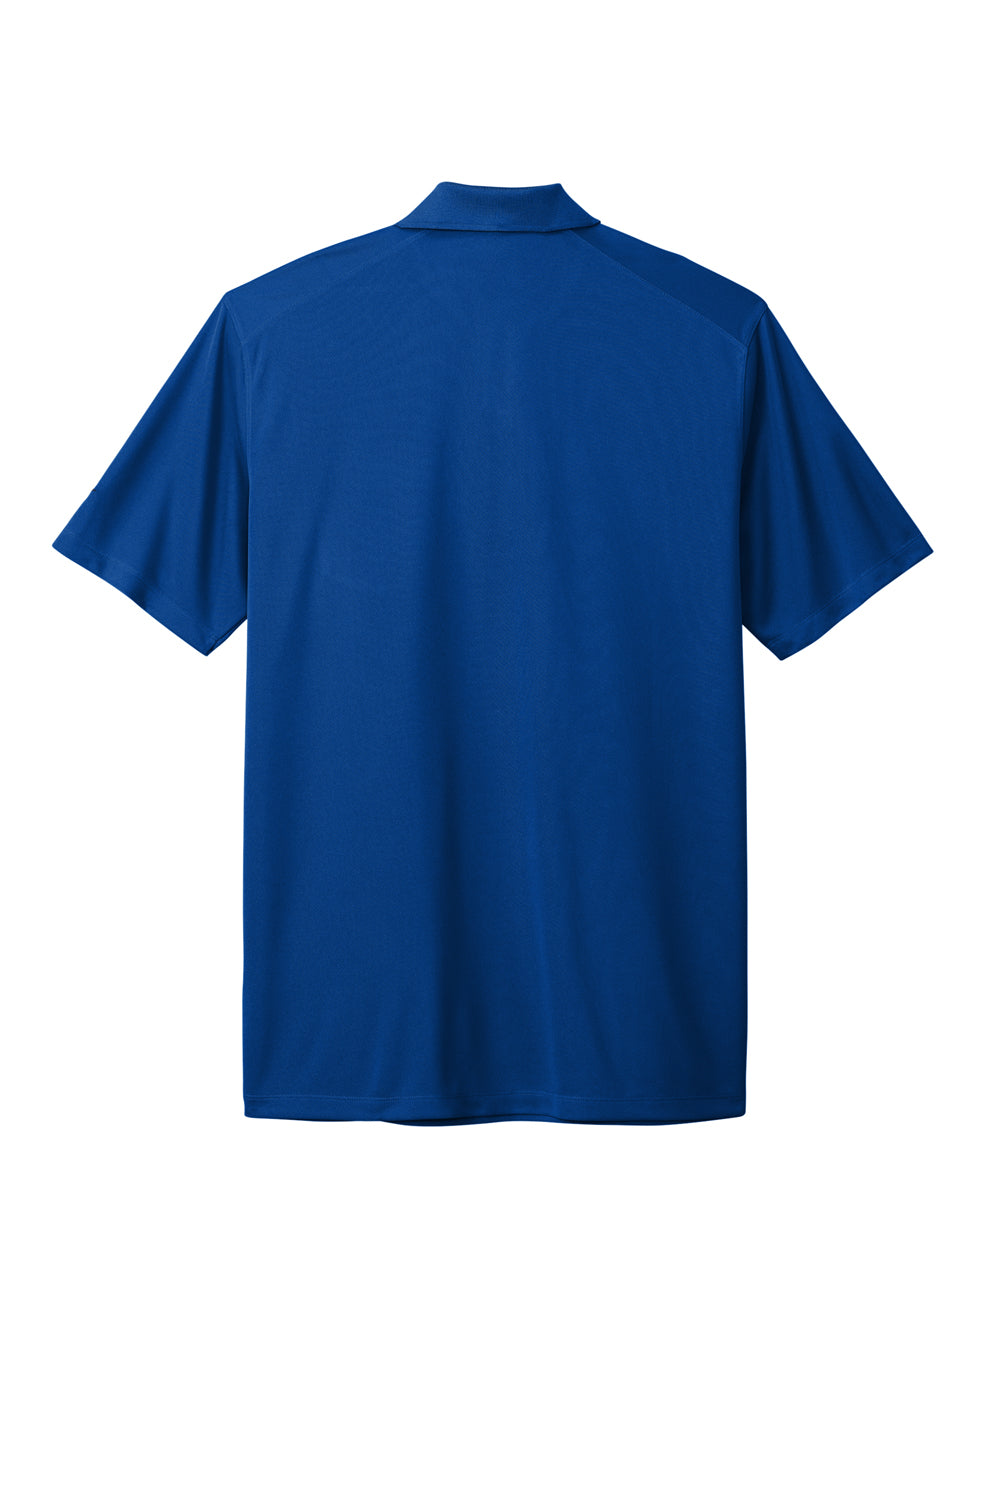 Nike NKDC2103 Mens Dri-Fit Moisture Wicking Micro Pique 2.0 Short Sleeve Polo Shirt w/ Pocket Gym Blue Flat Back